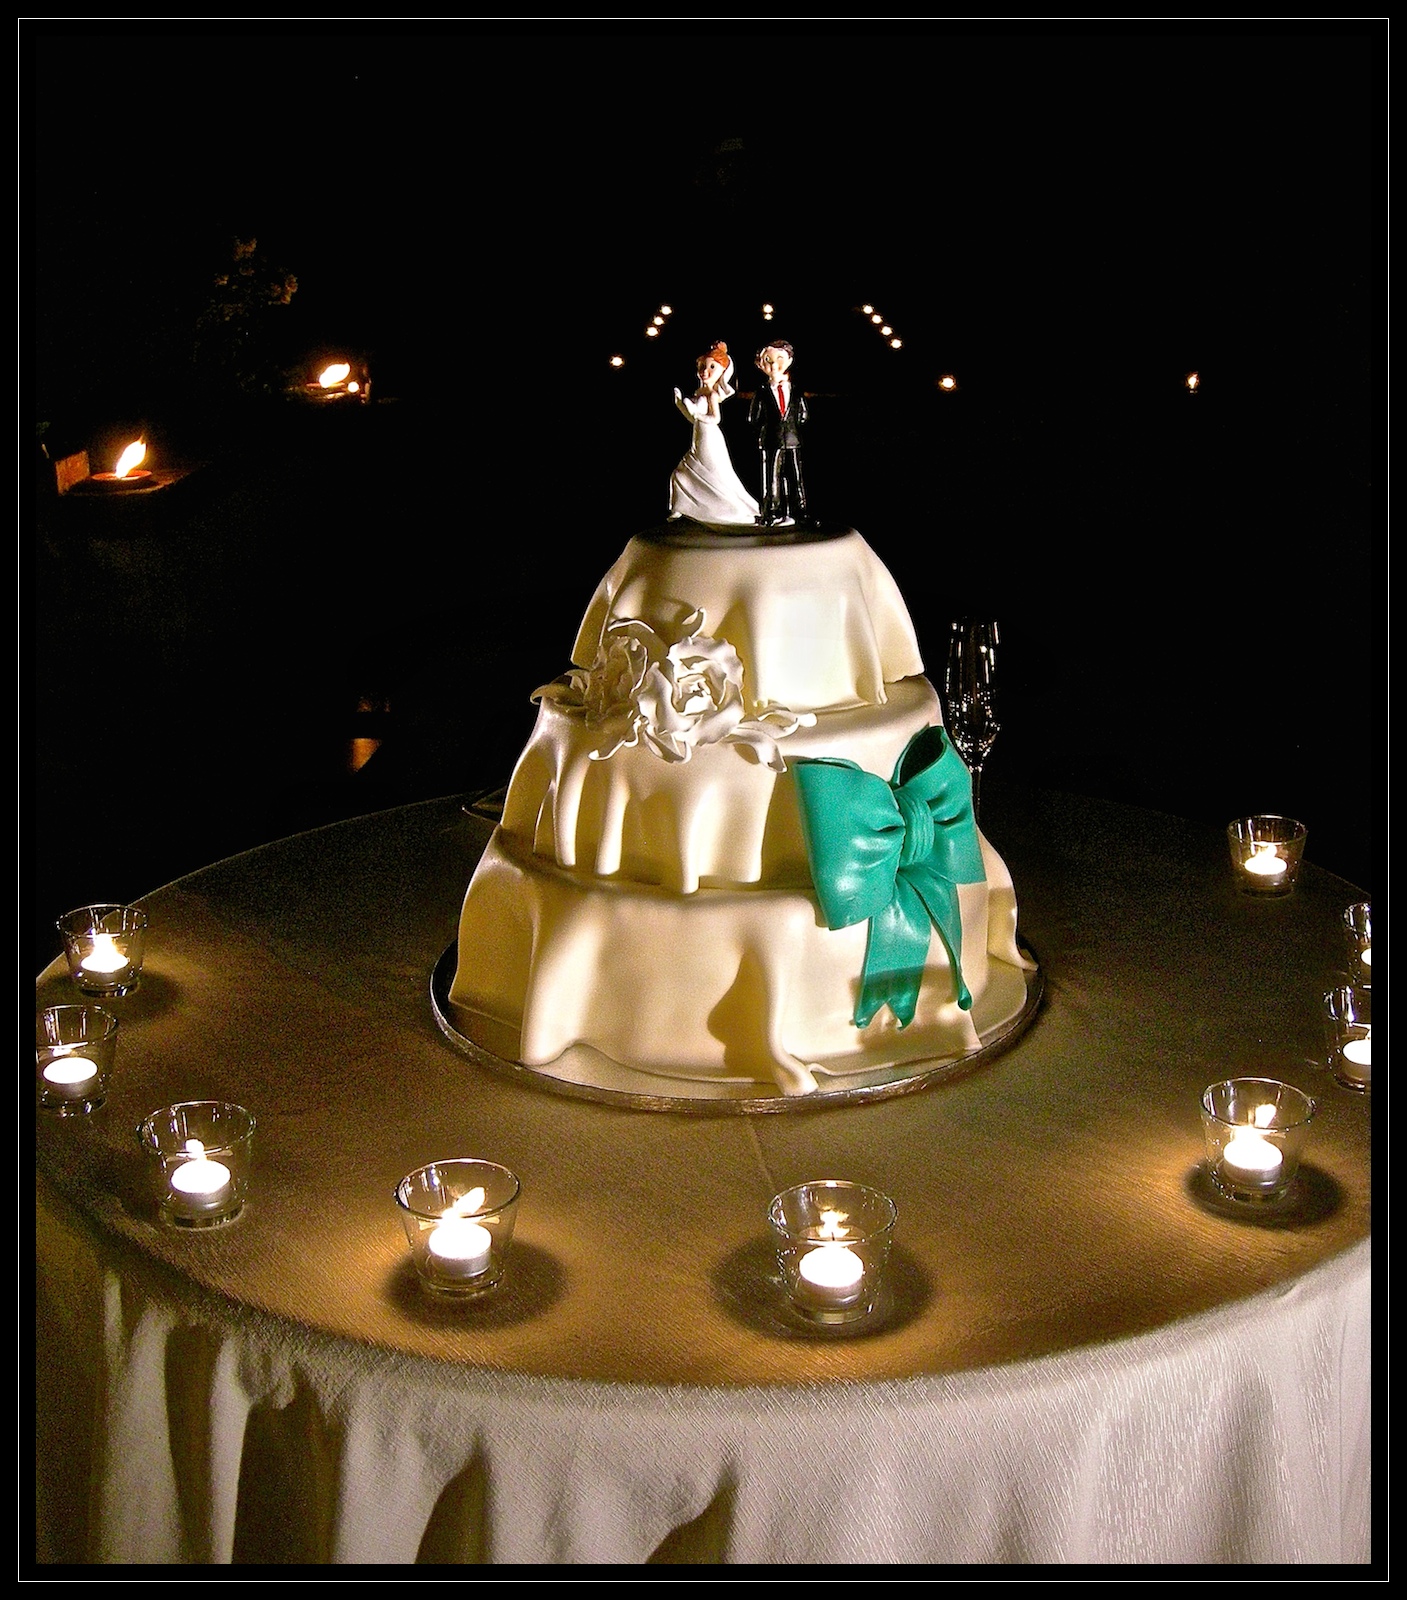 Wedding cake: "Matrimonio da Tiffany"